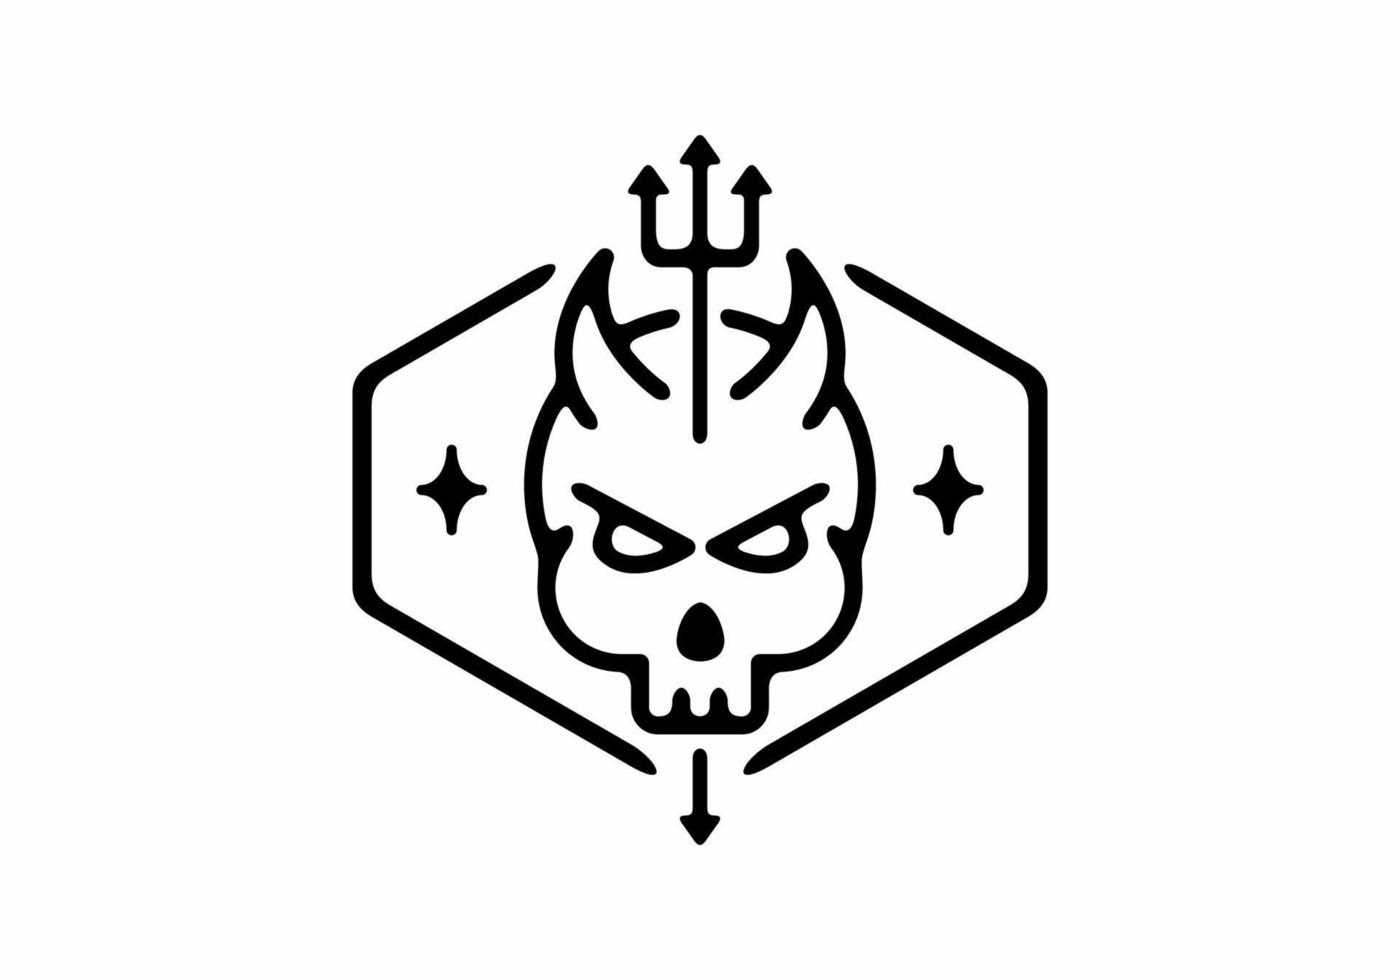 Skeleton head of devil with spear line art illustration vector